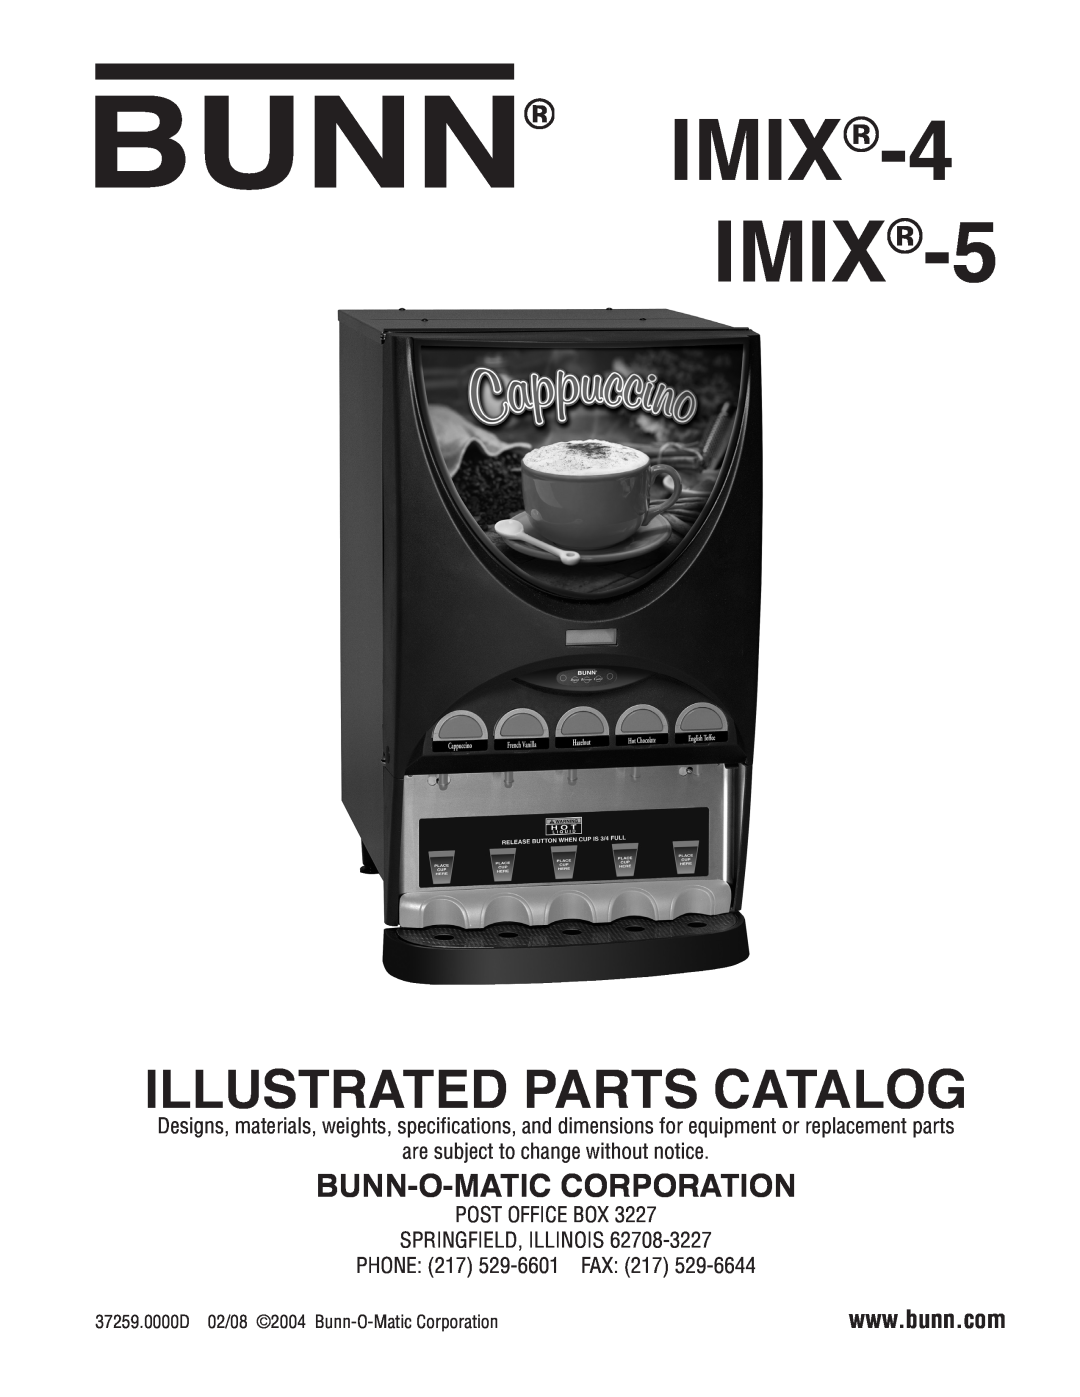 Bunn specifications IMIX-4 IMIX-5, Illustrated Parts Catalog, Bunn-O-Maticcorporation 